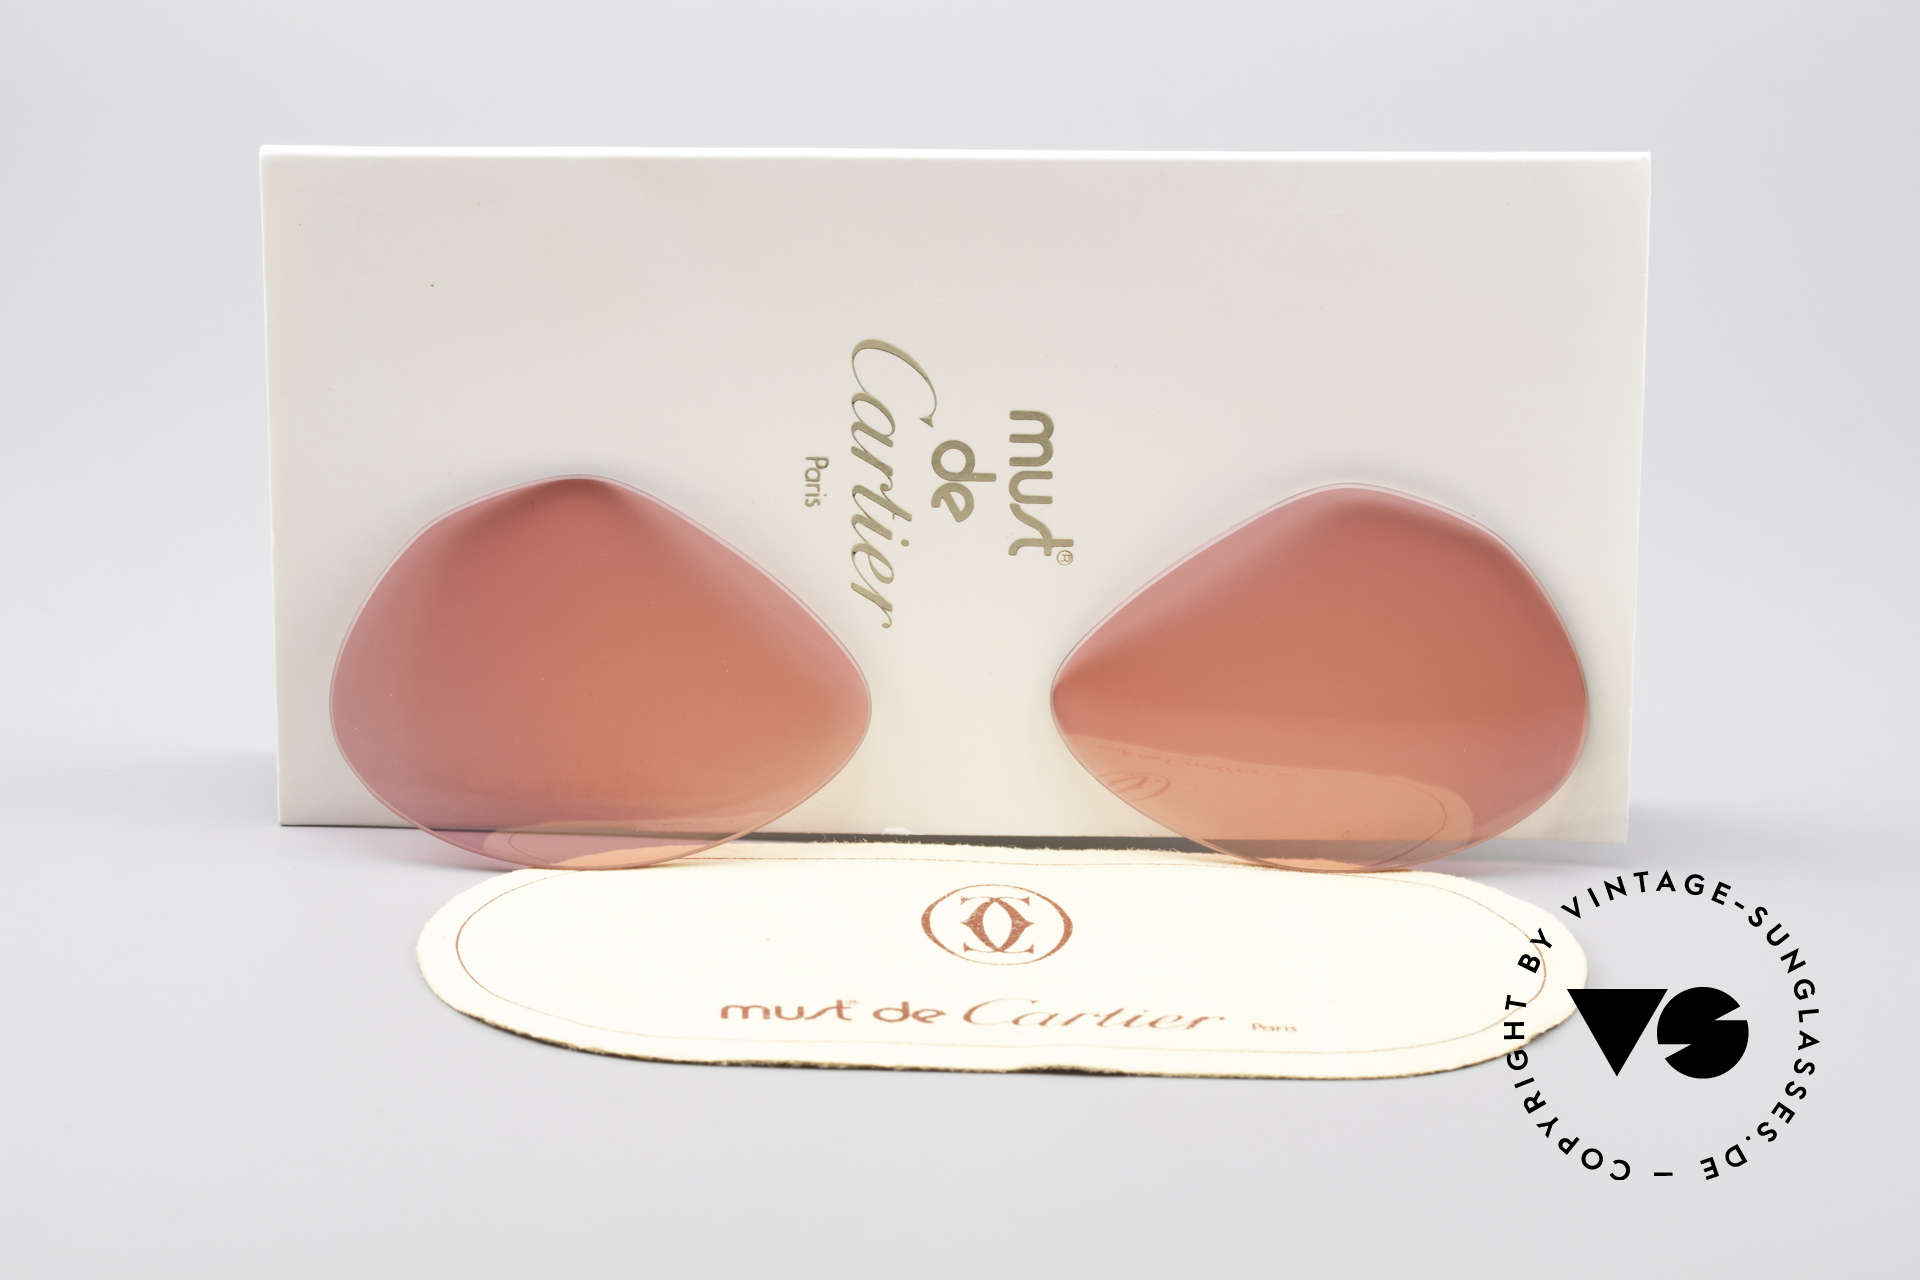 Cartier Vendome Lenses - M Pink Sun Lenses, replacement lenses for Cartier mod. Vendome 59mm size, Made for Men and Women